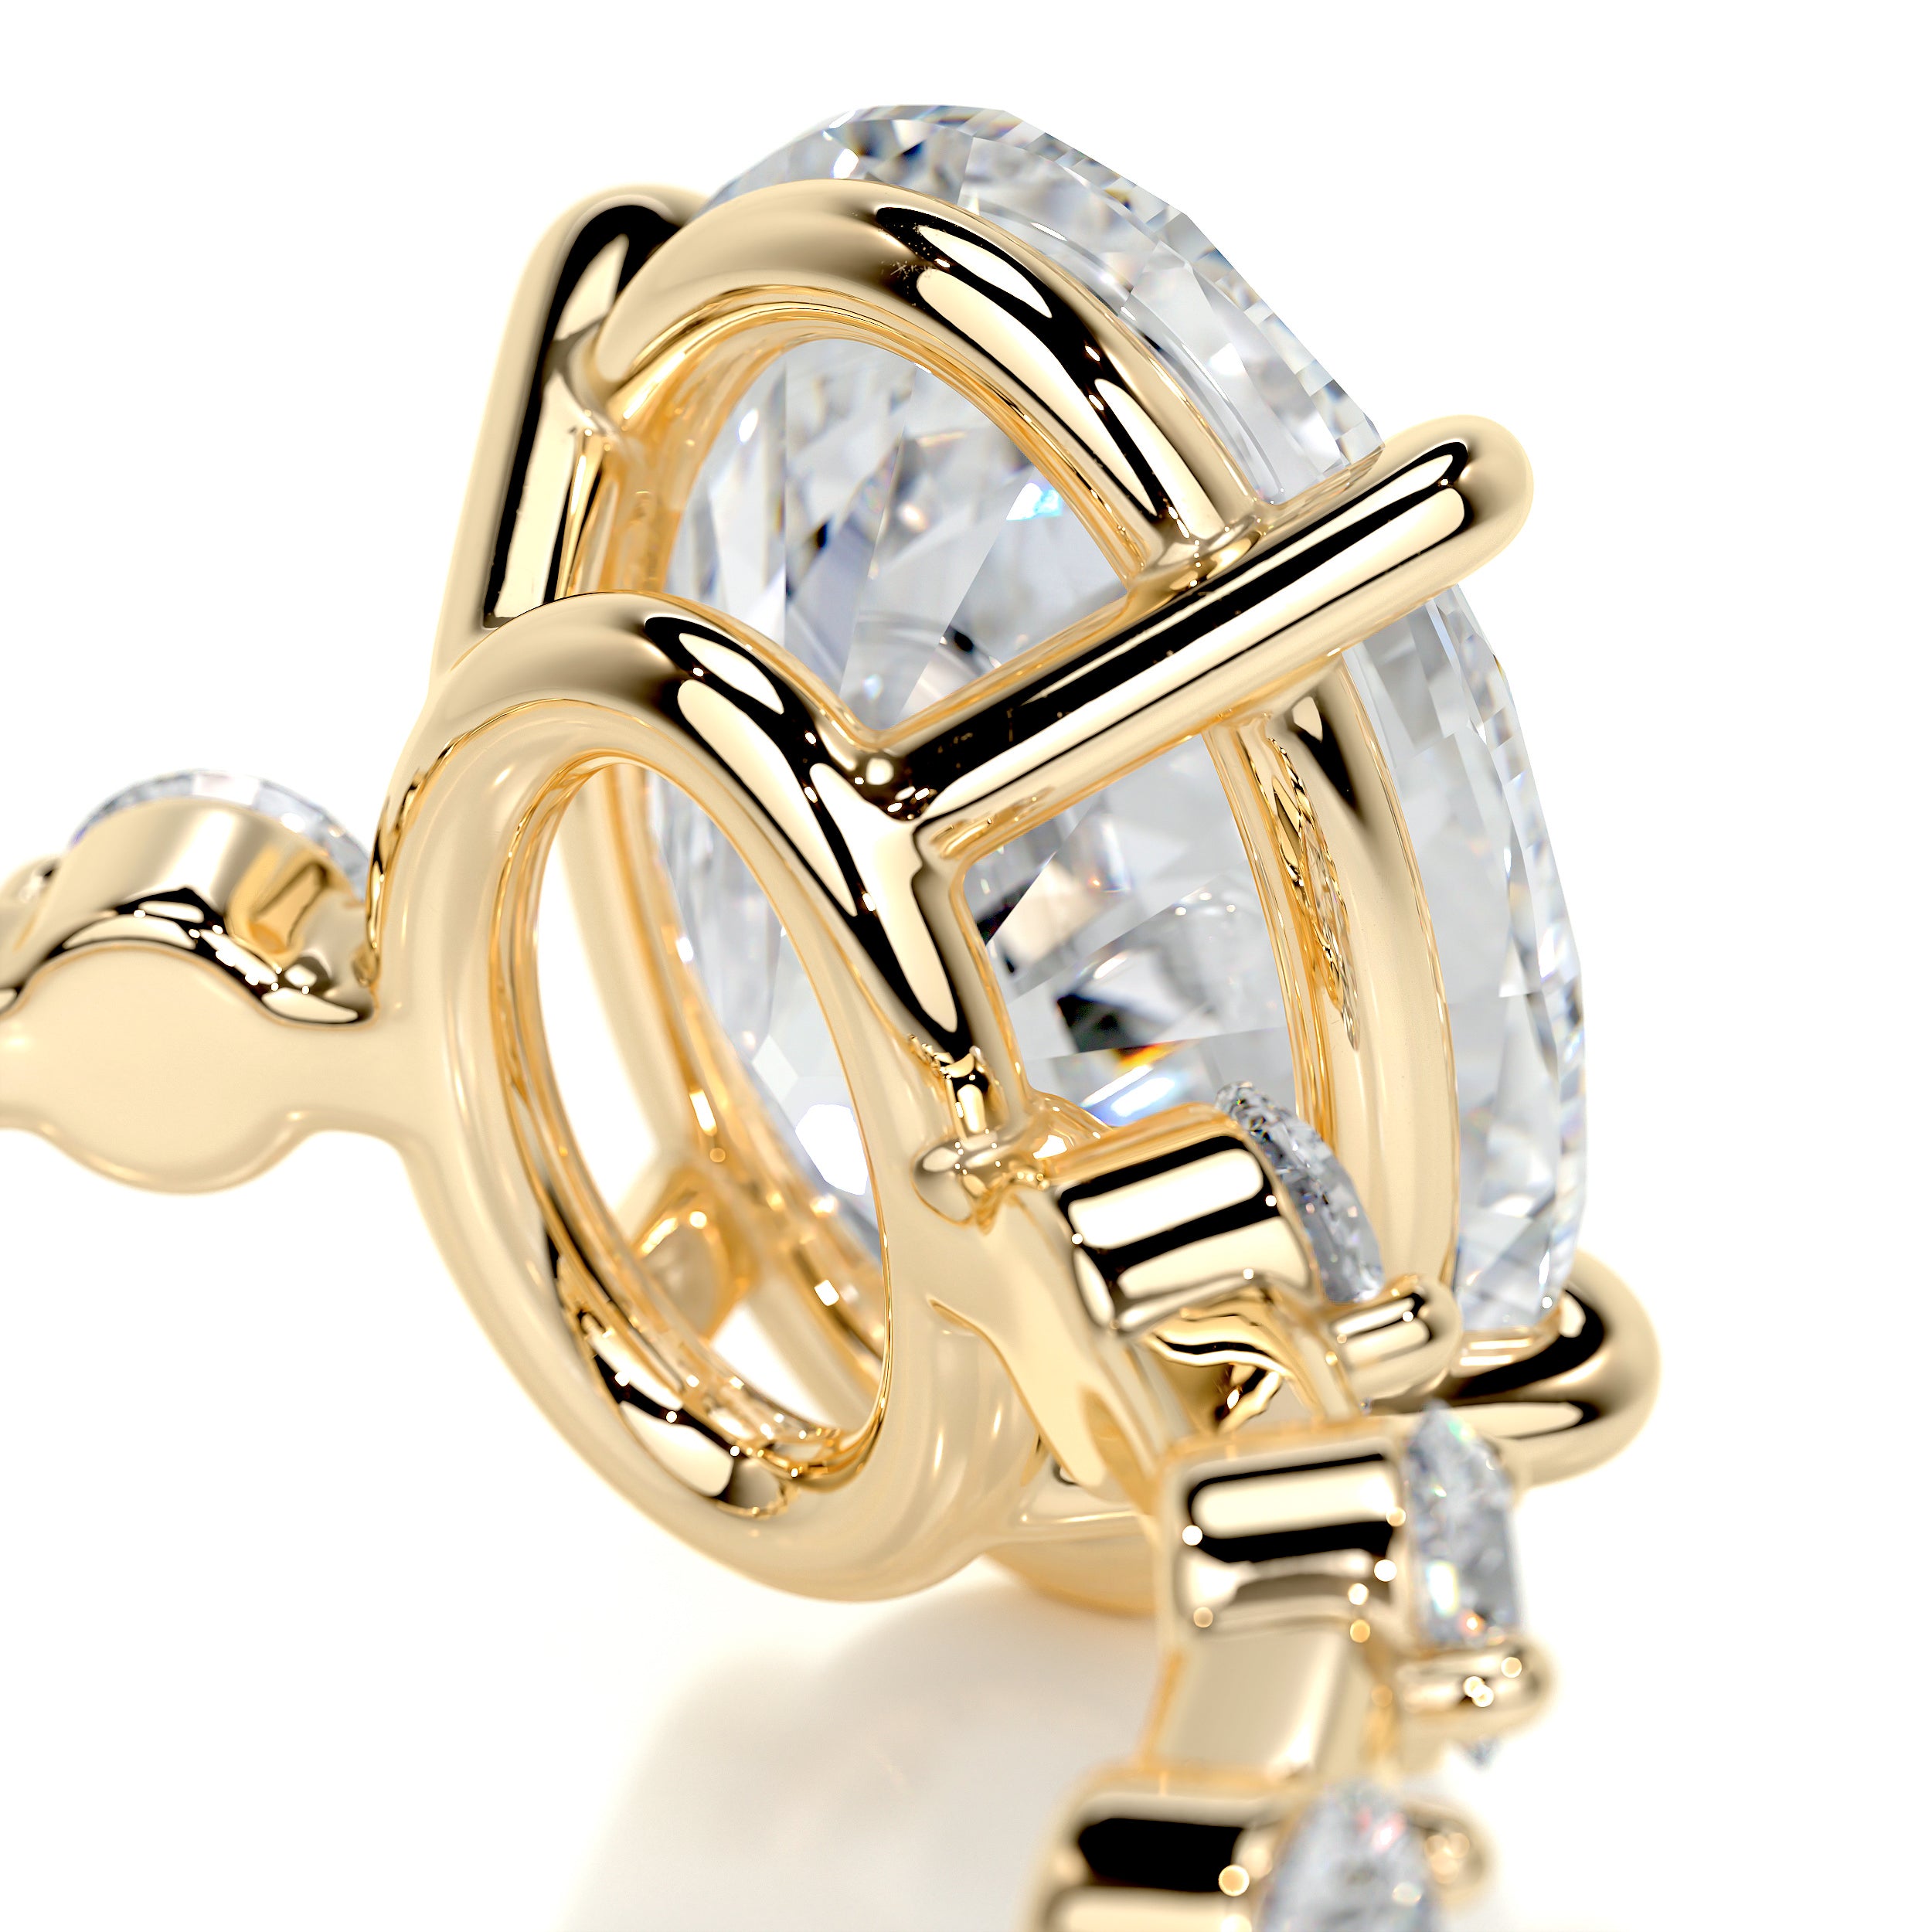 Bell Diamond Engagement Ring -18K Yellow Gold